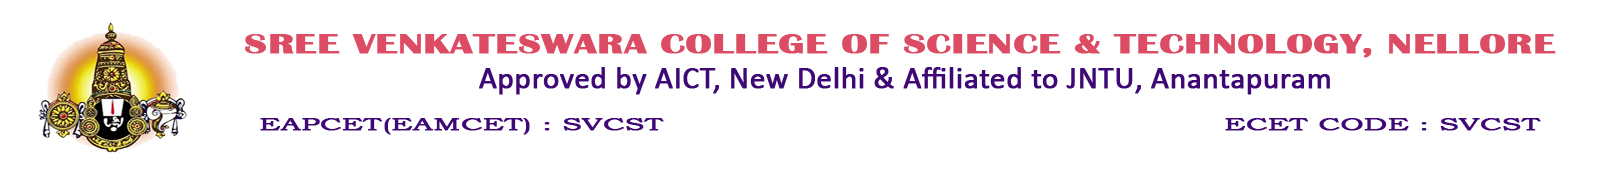 SVCN Engineering College In Nellore